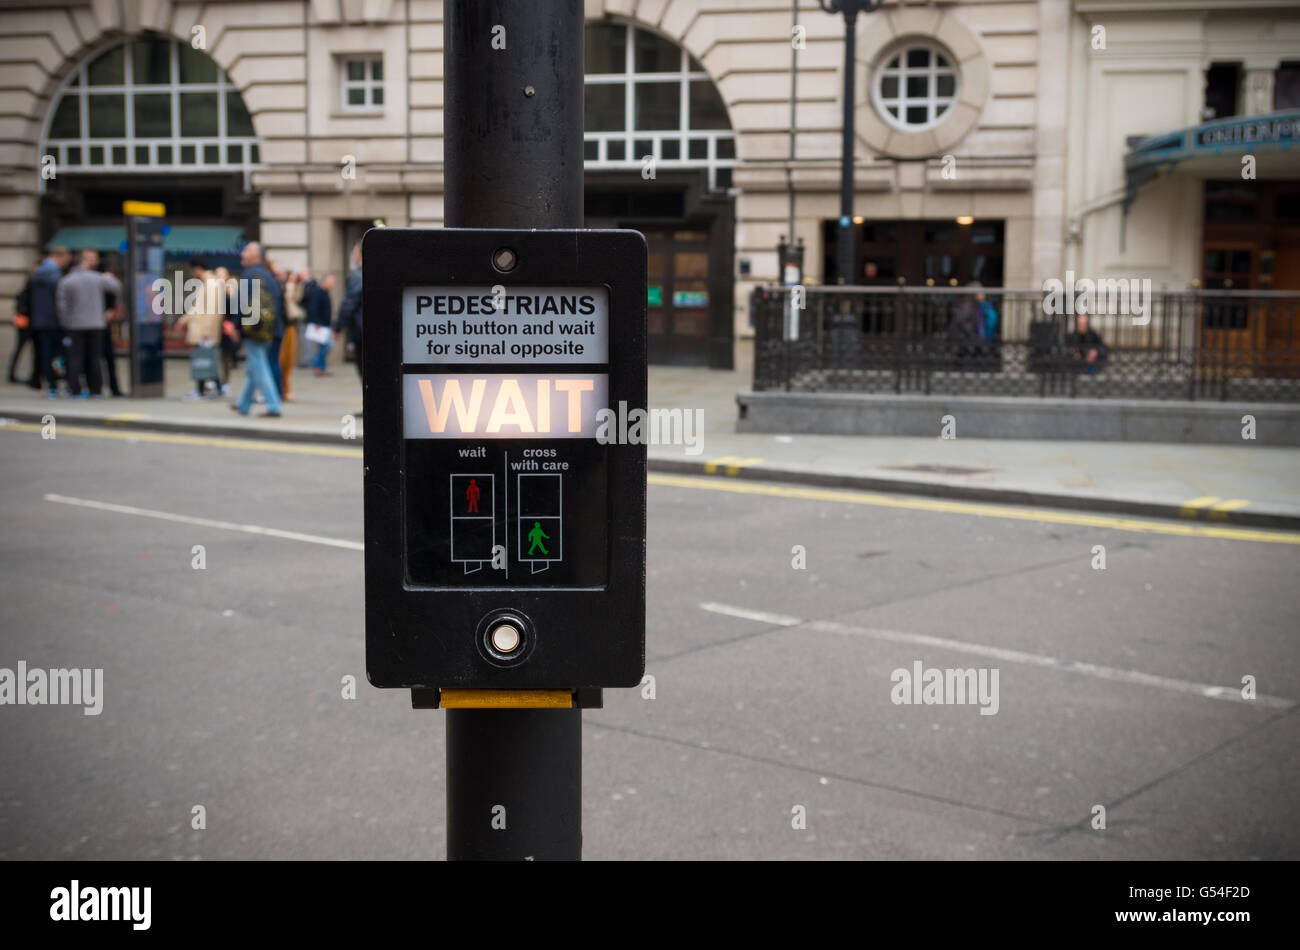 pedestrian button saying Wait in London, england Stock Photo